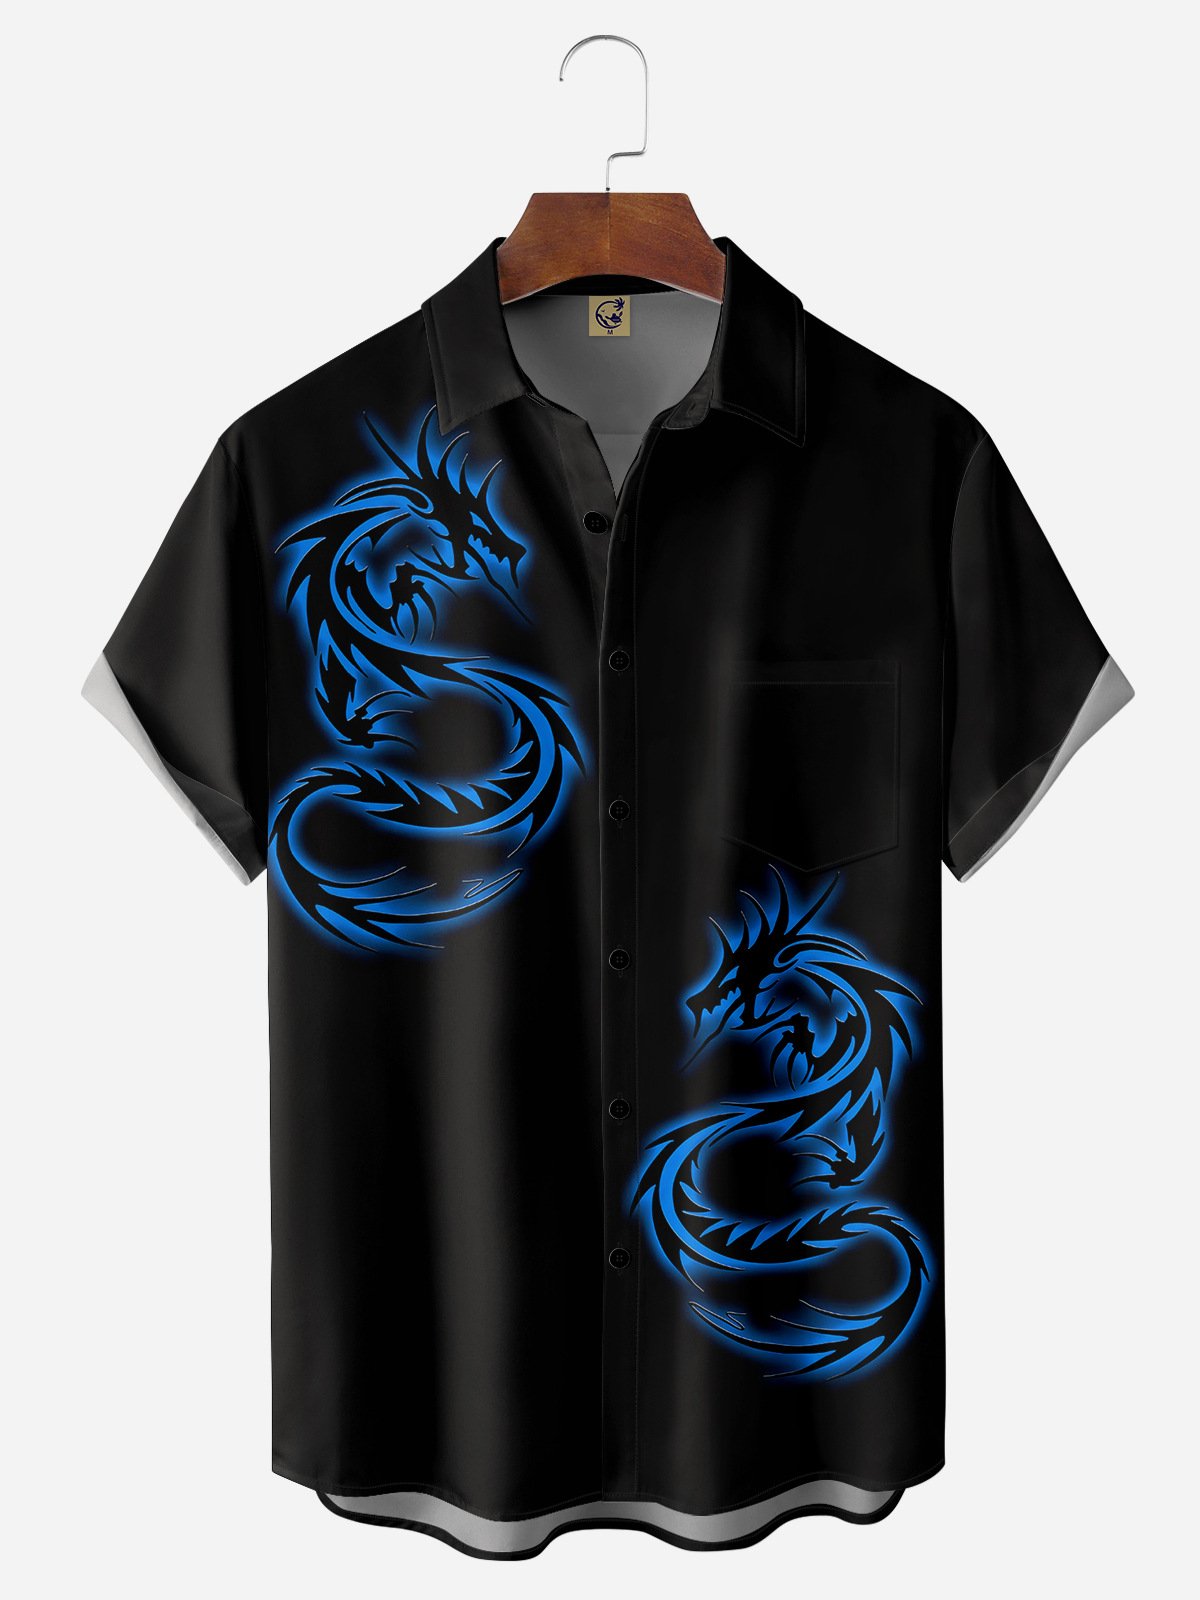 Hardaddy Artistic Dragon Pattern Chest Pocket Short Sleeve Casual Shirt